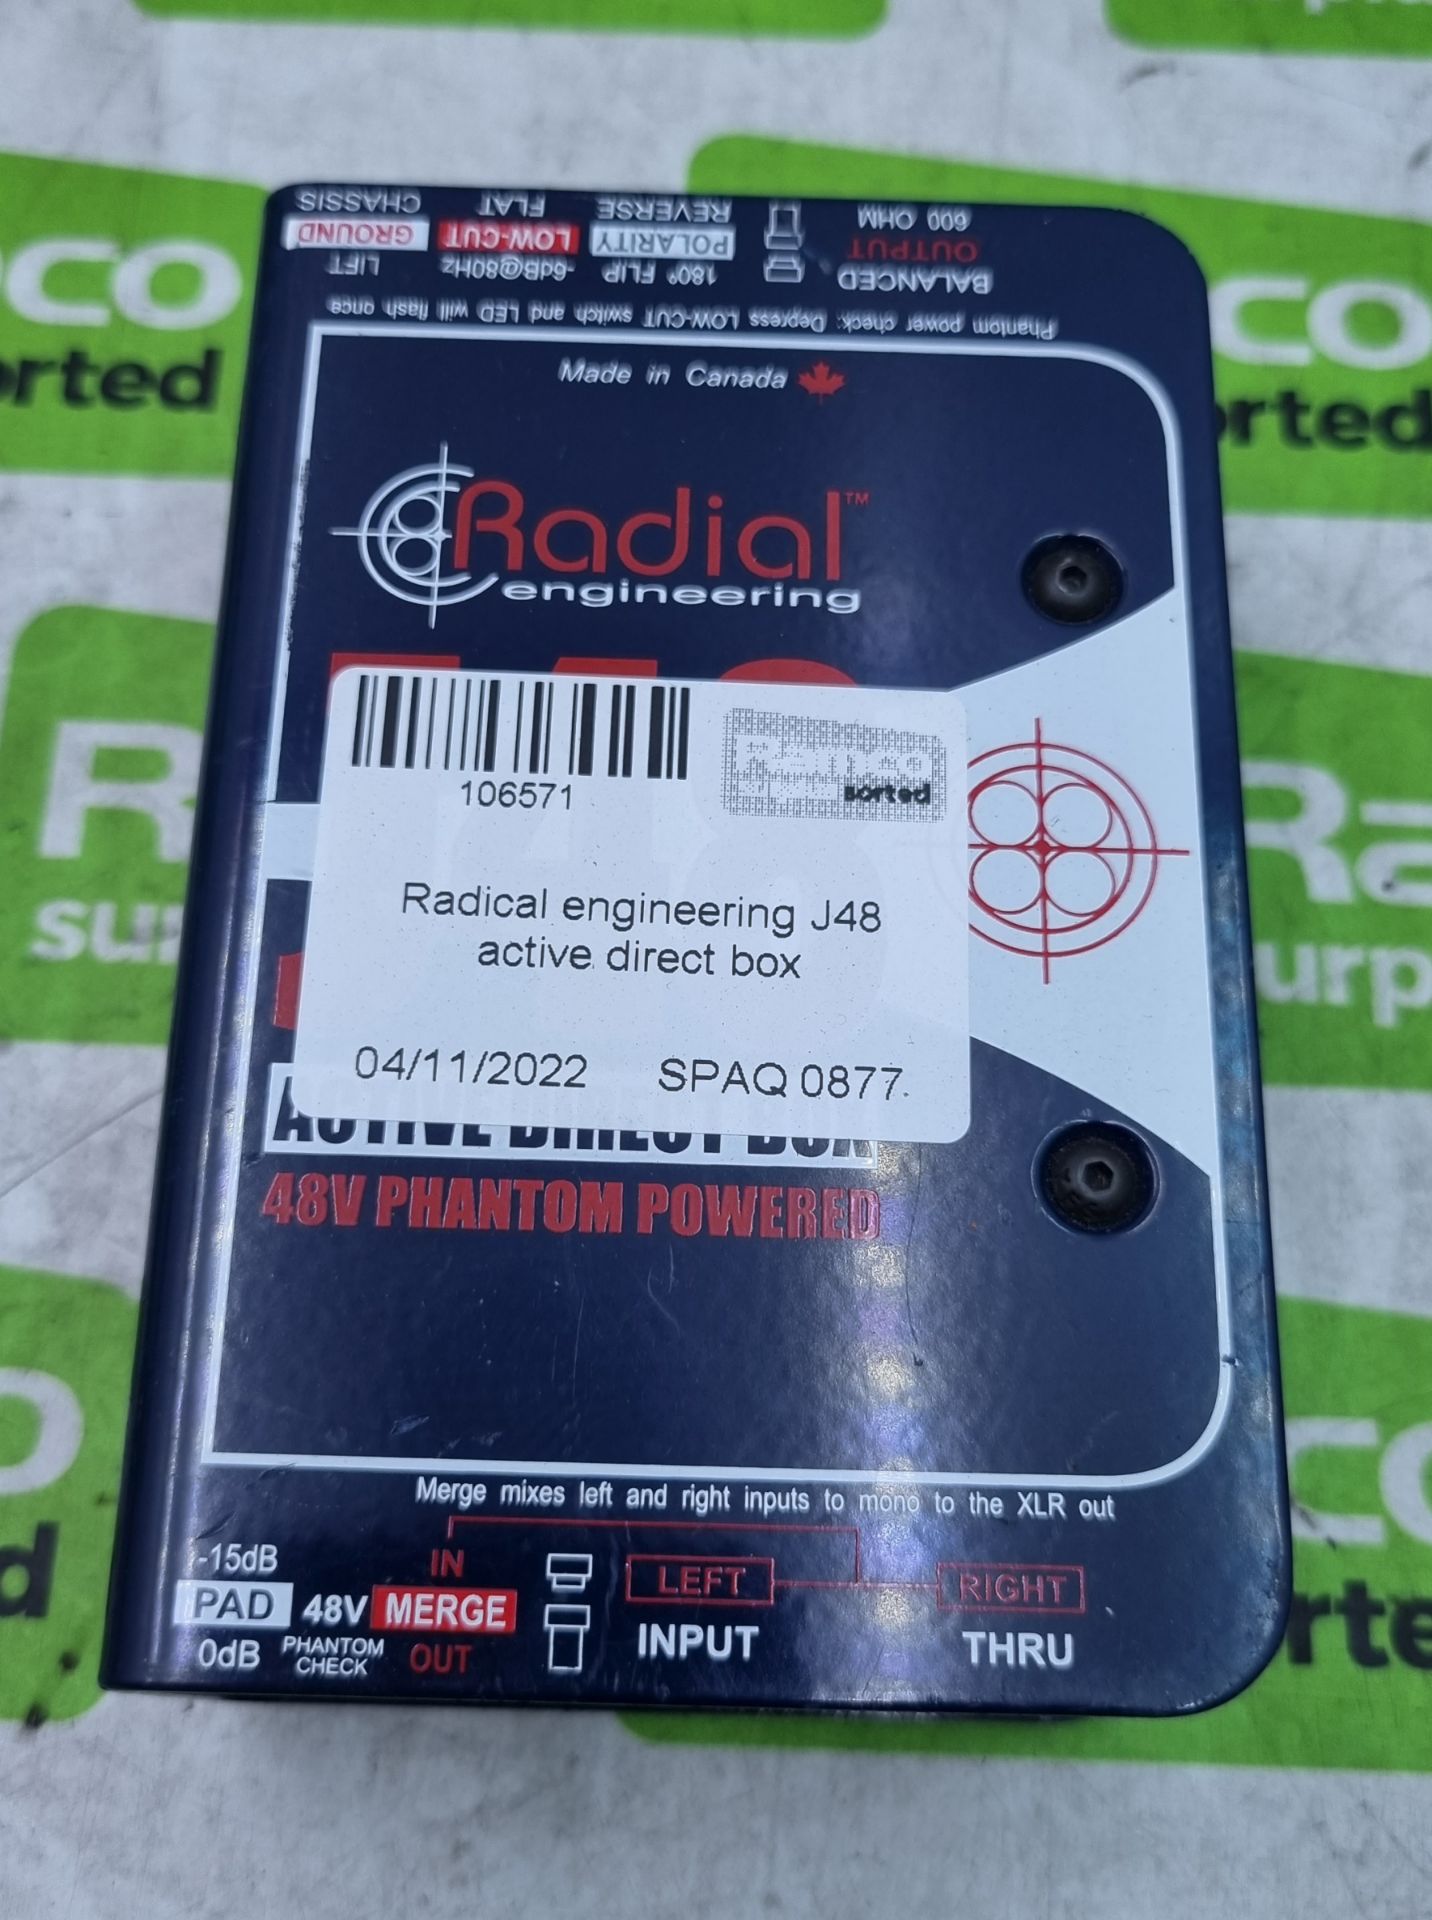 Radial engineering J48 active direct box